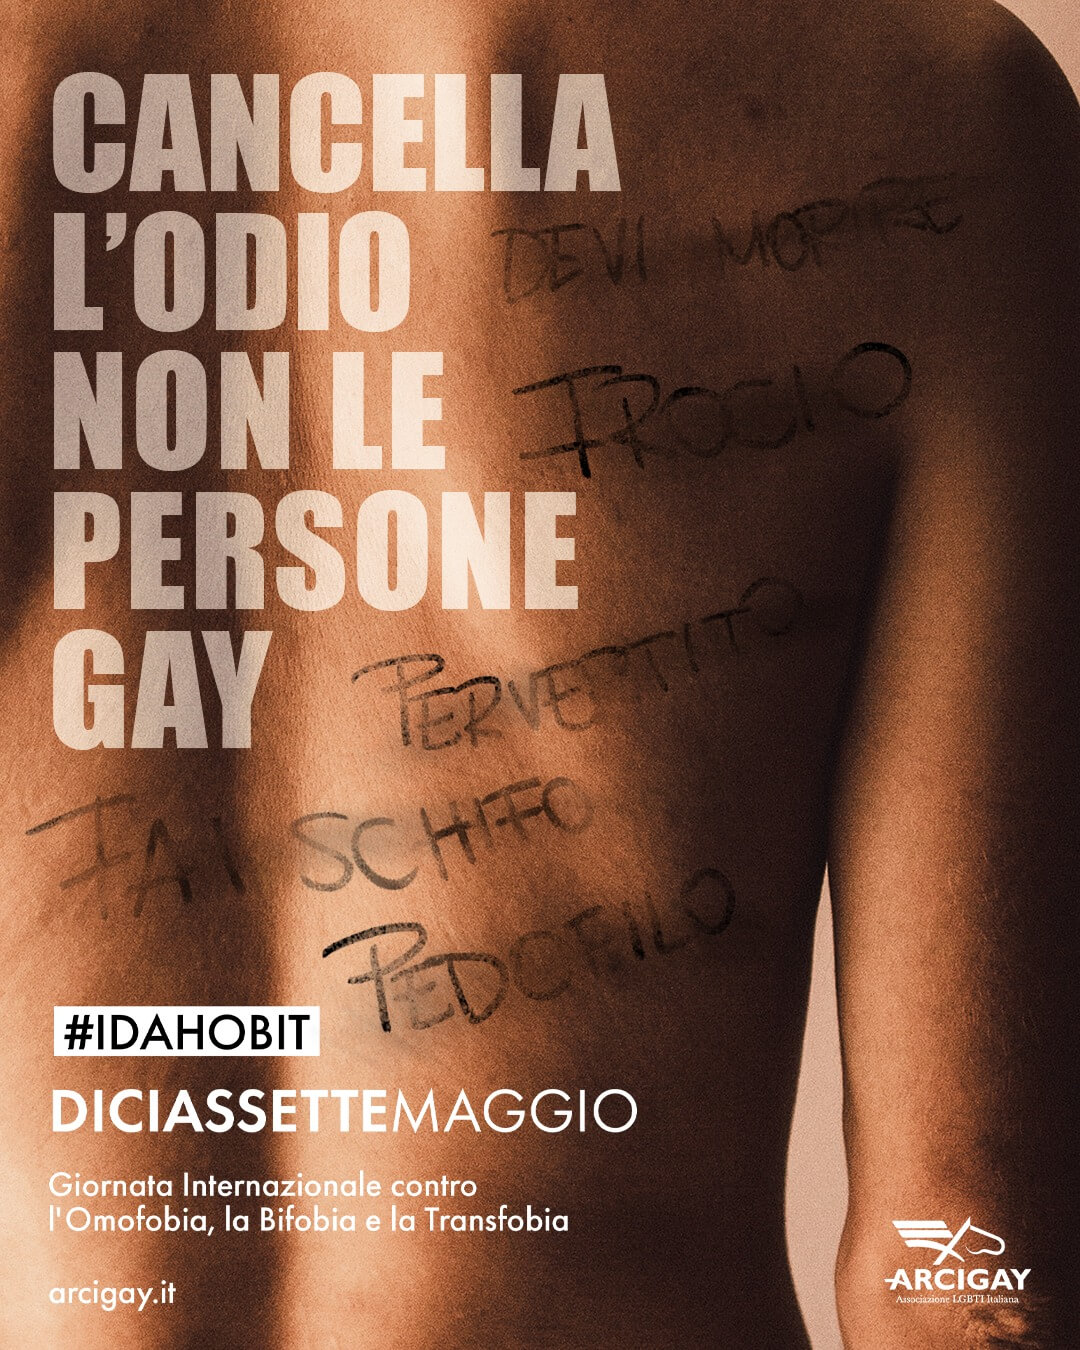 Omobitransfobia, la nuova campagna Arcigay: "Cancella l'odio, non le persone LGBTQIA+" - arcigay omofobia 11 - Gay.it